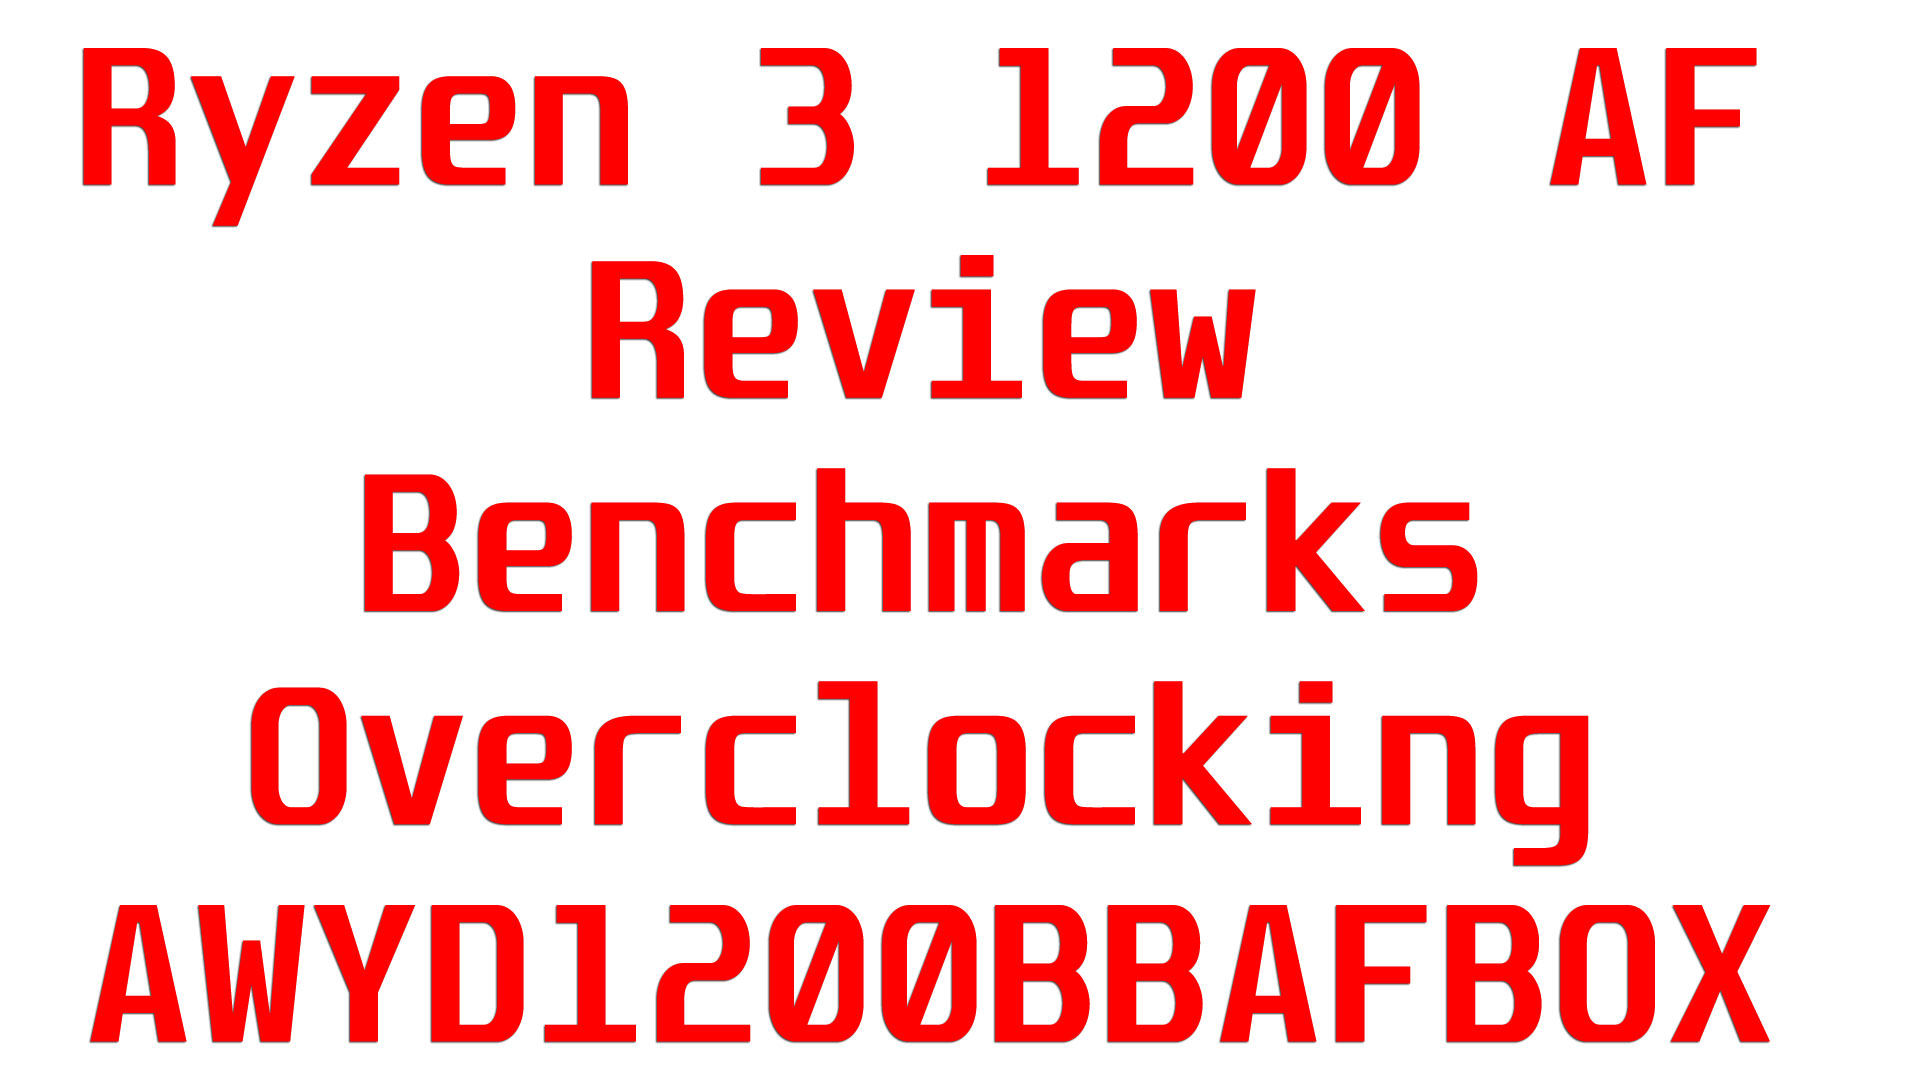 Ryzen 3 1200 AF Review, Benchmarks, Overclocking